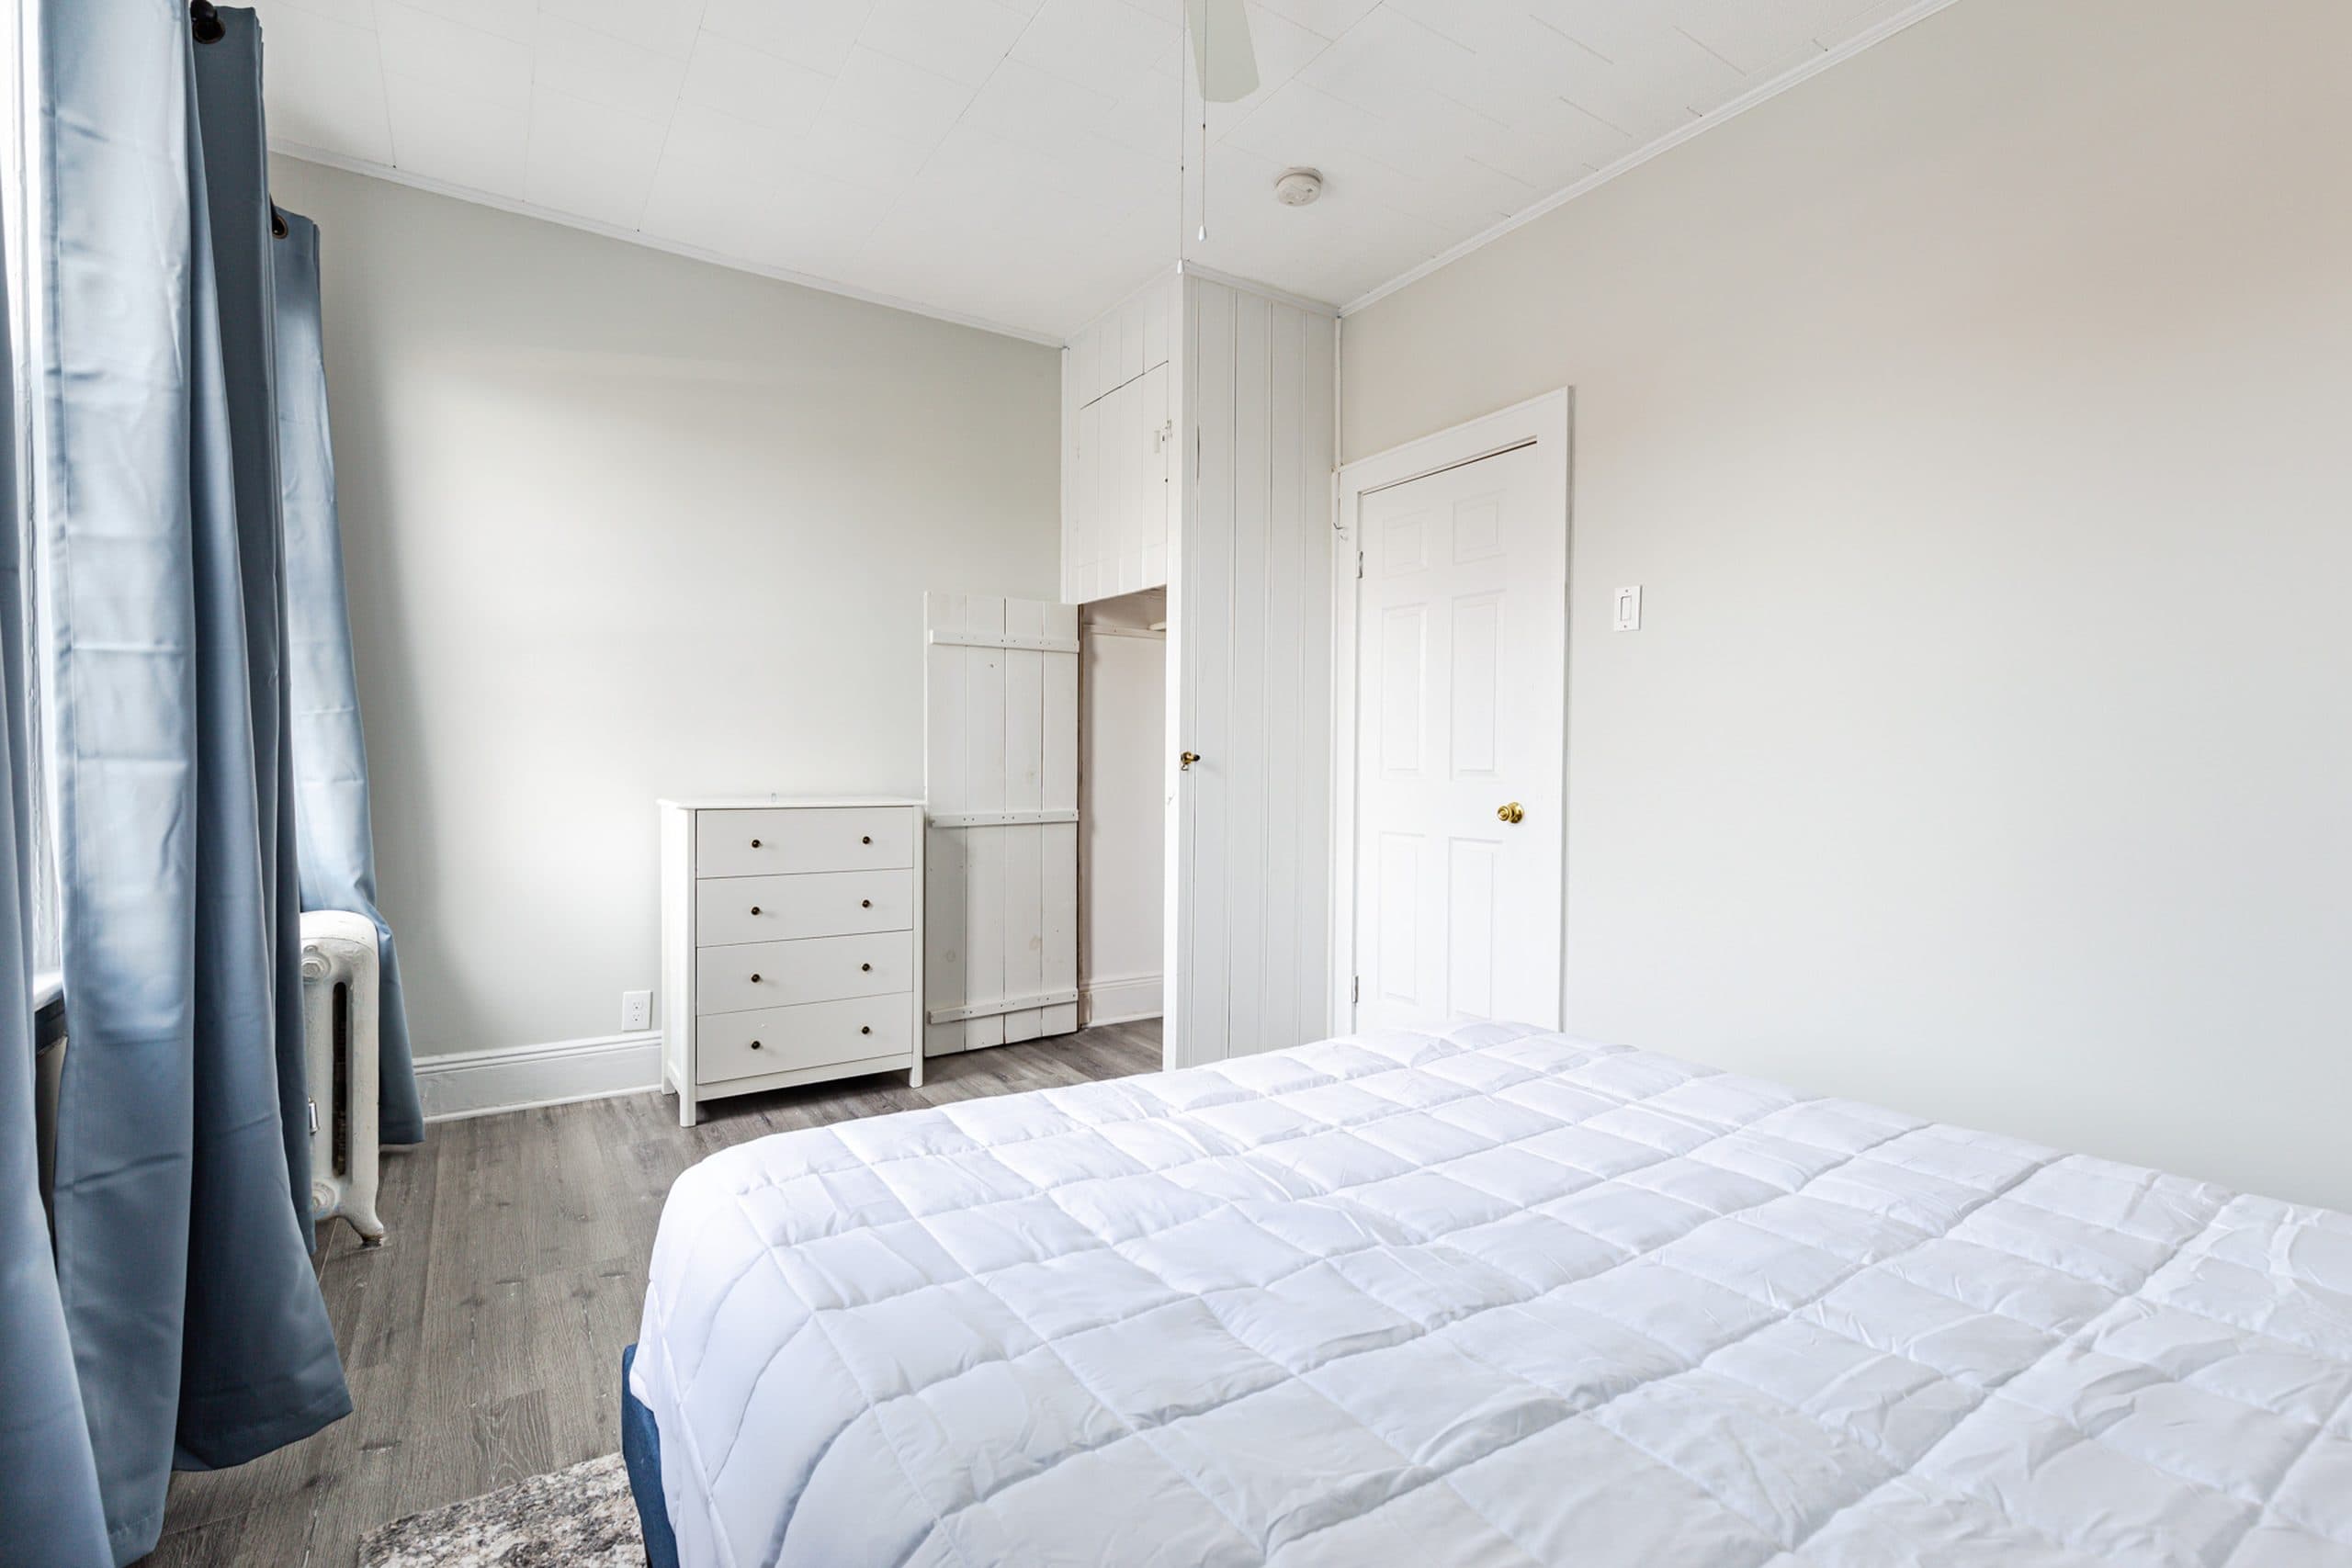 Photo 17 of #4900: Full Bedroom B at June Homes